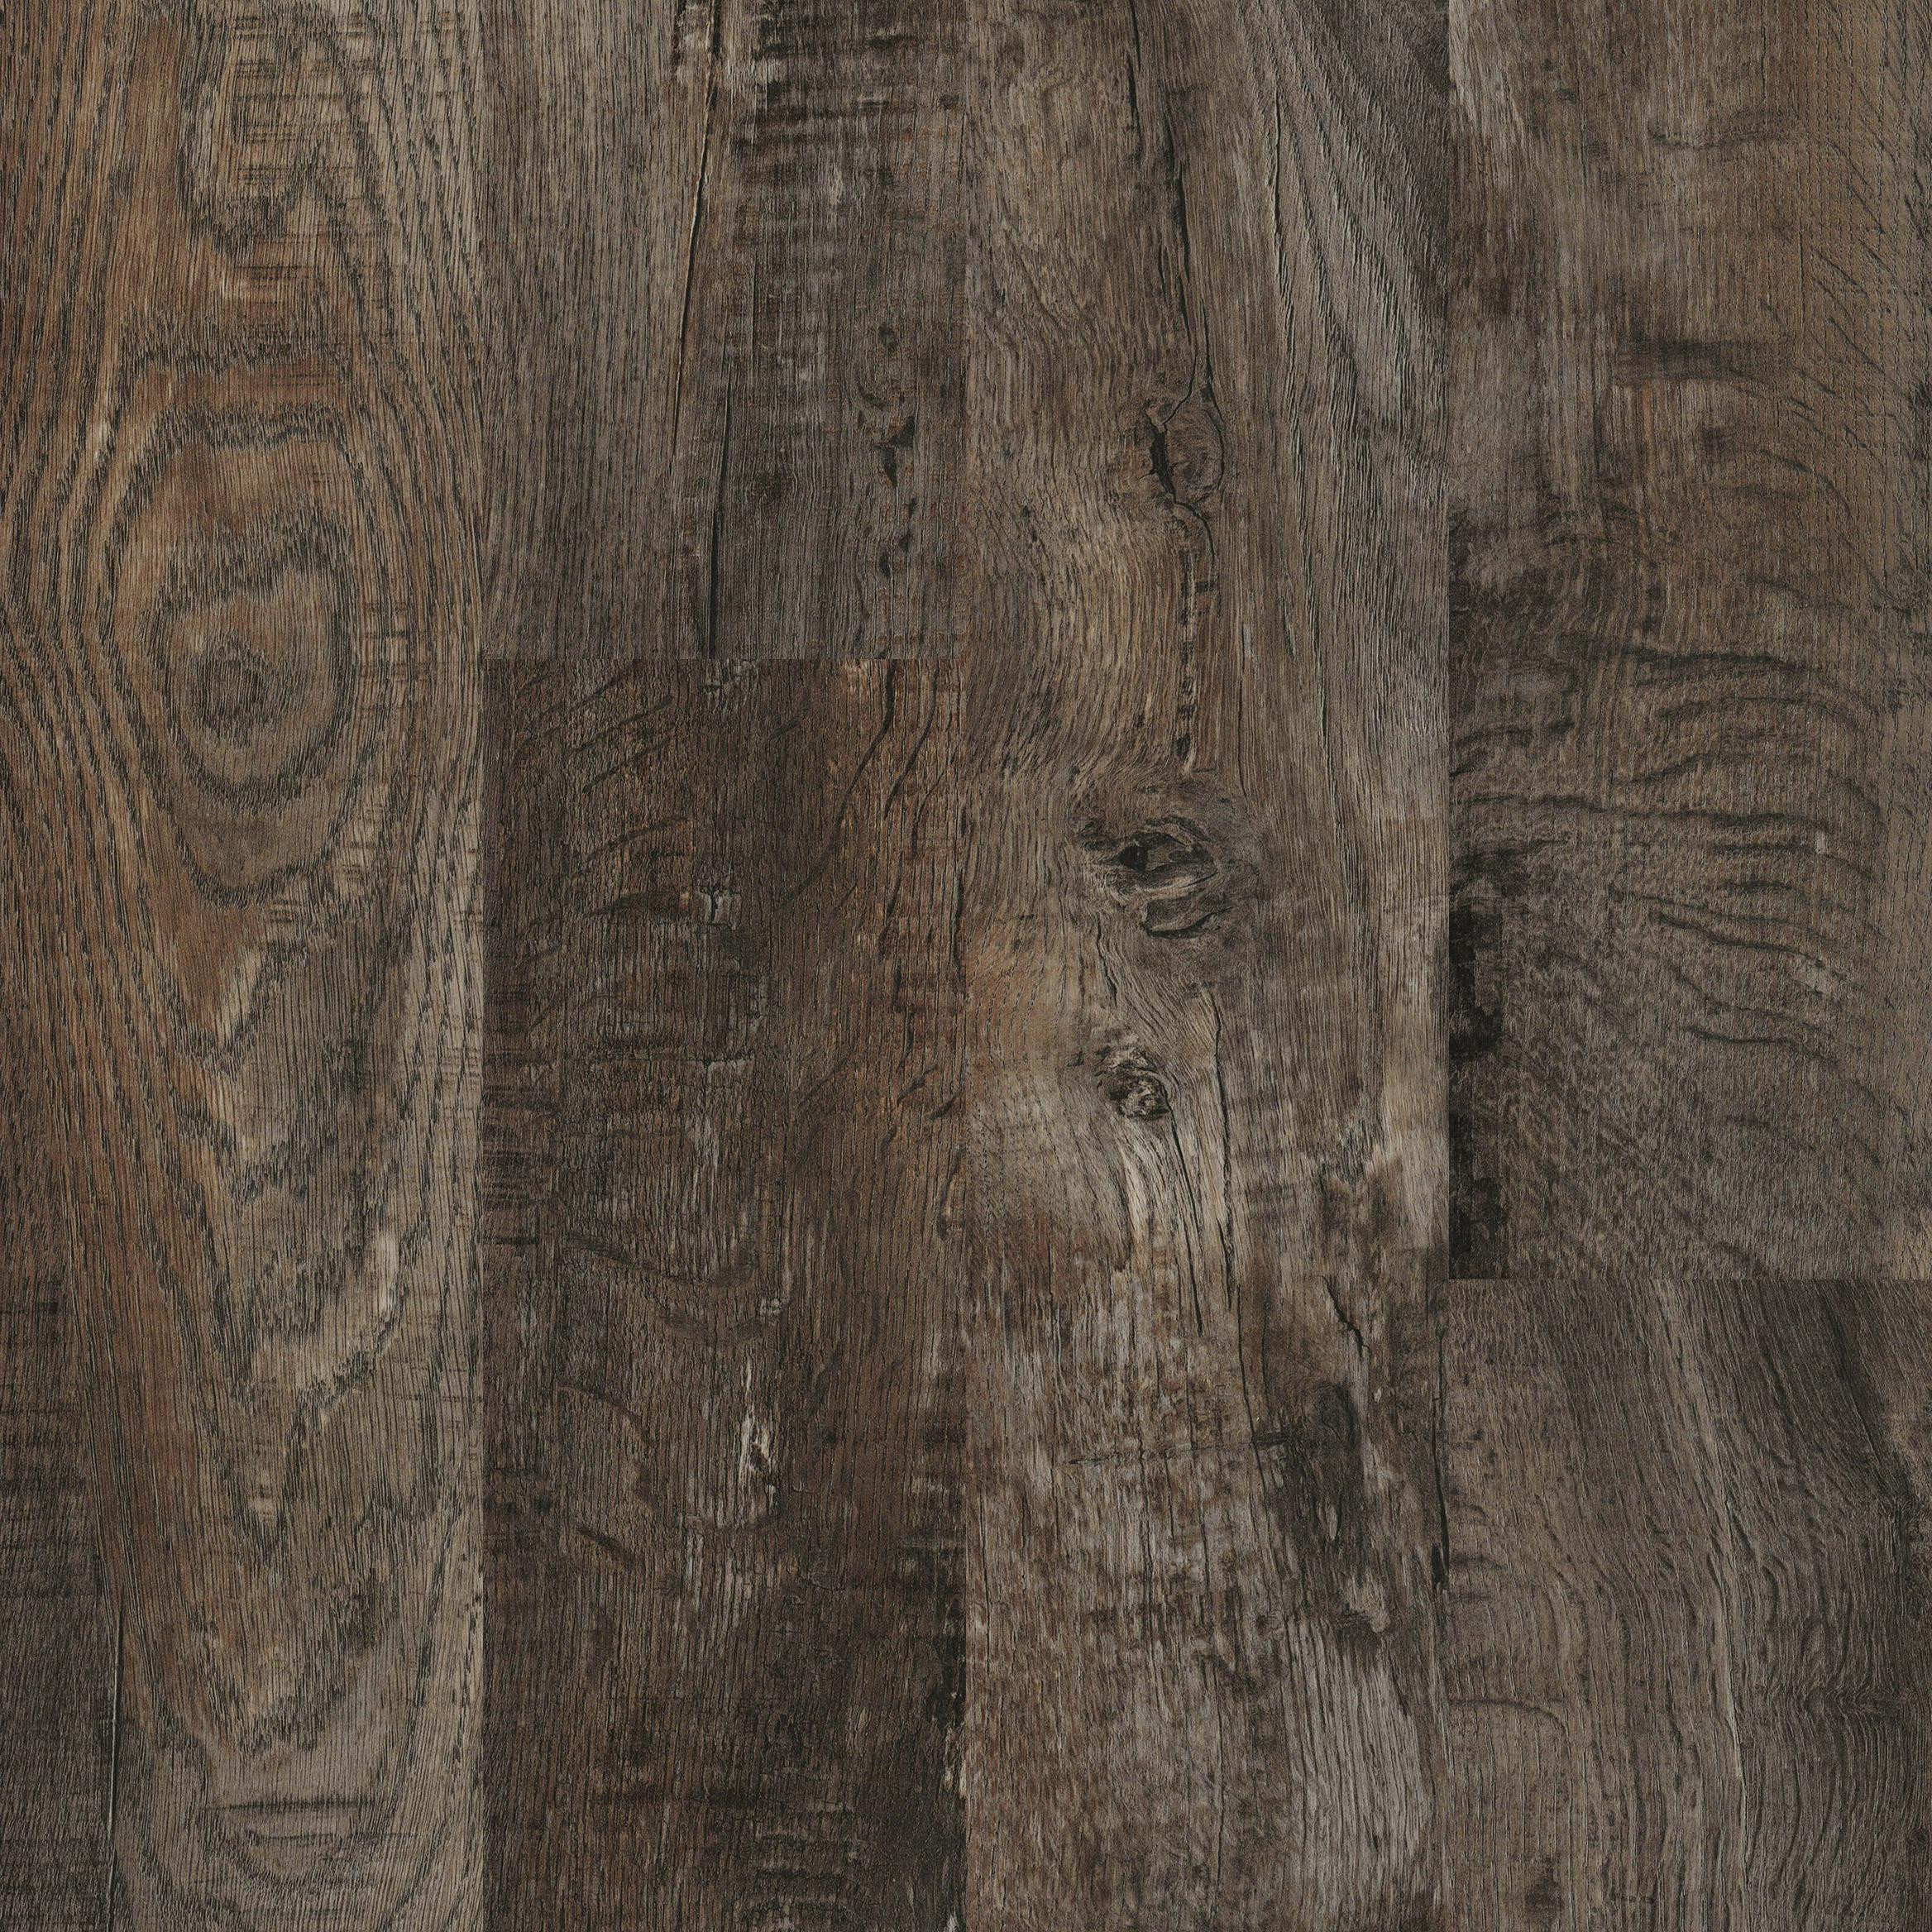 15 Spectacular 8 Wide Hardwood Flooring 2024 free download 8 wide hardwood flooring of home expressions hearthstone oak 6 wide luxury vinyl plank flooring throughout 360390 5 84 x 35 8 approved